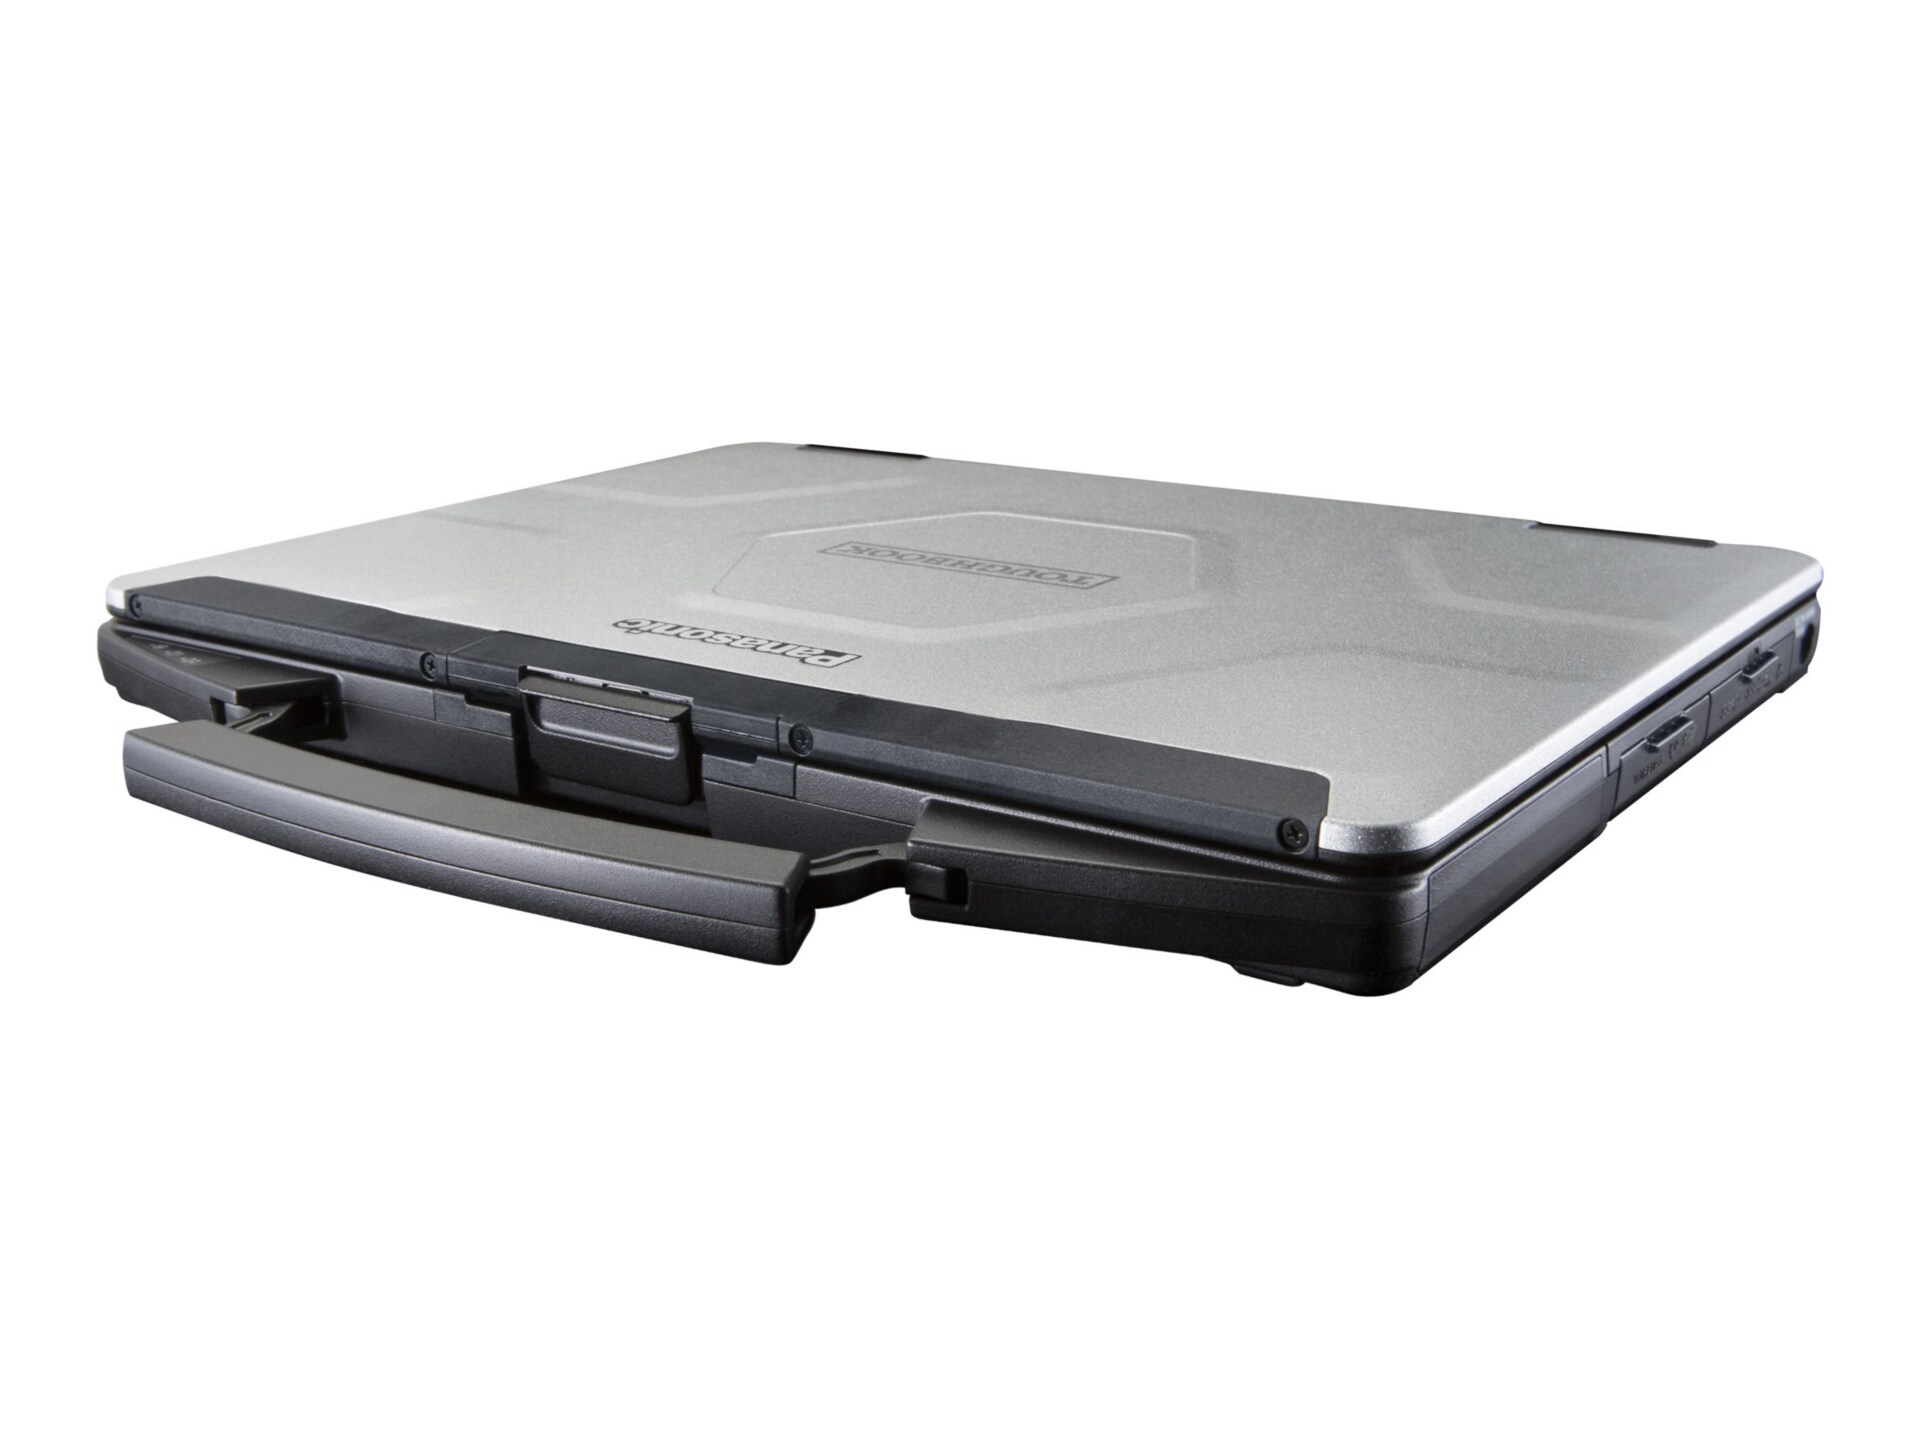 Panasonic Toughbook 54 Gloved Multi Touch - 14" - Core i5 6300U - 8 GB RAM - 500 GB HDD